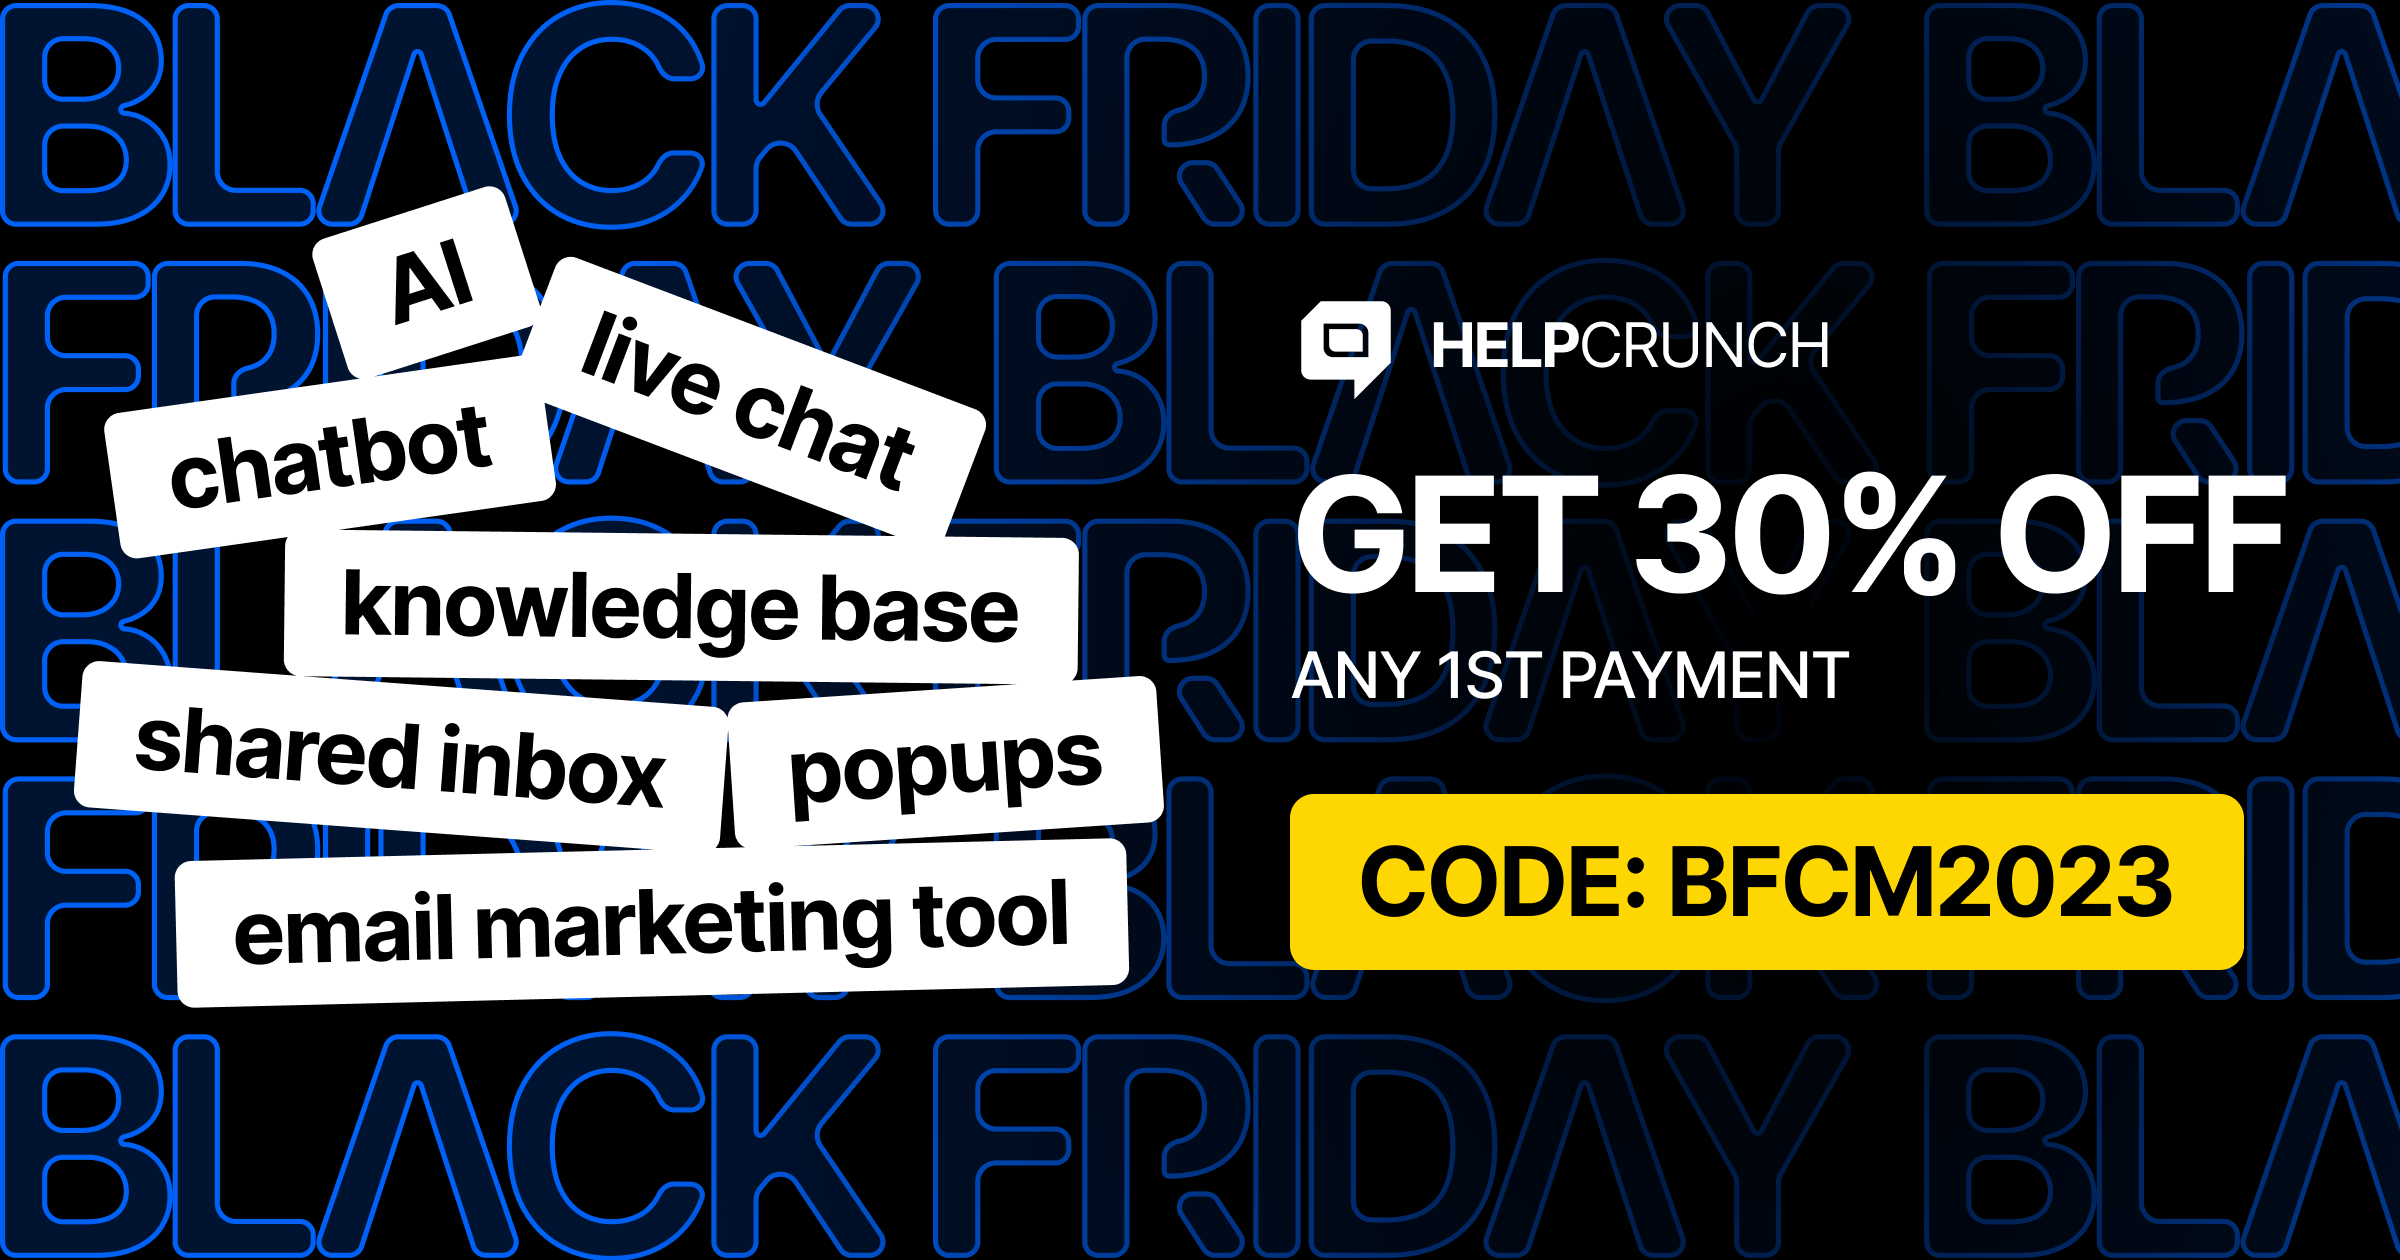 Helpcrunch Black Friday deal banner